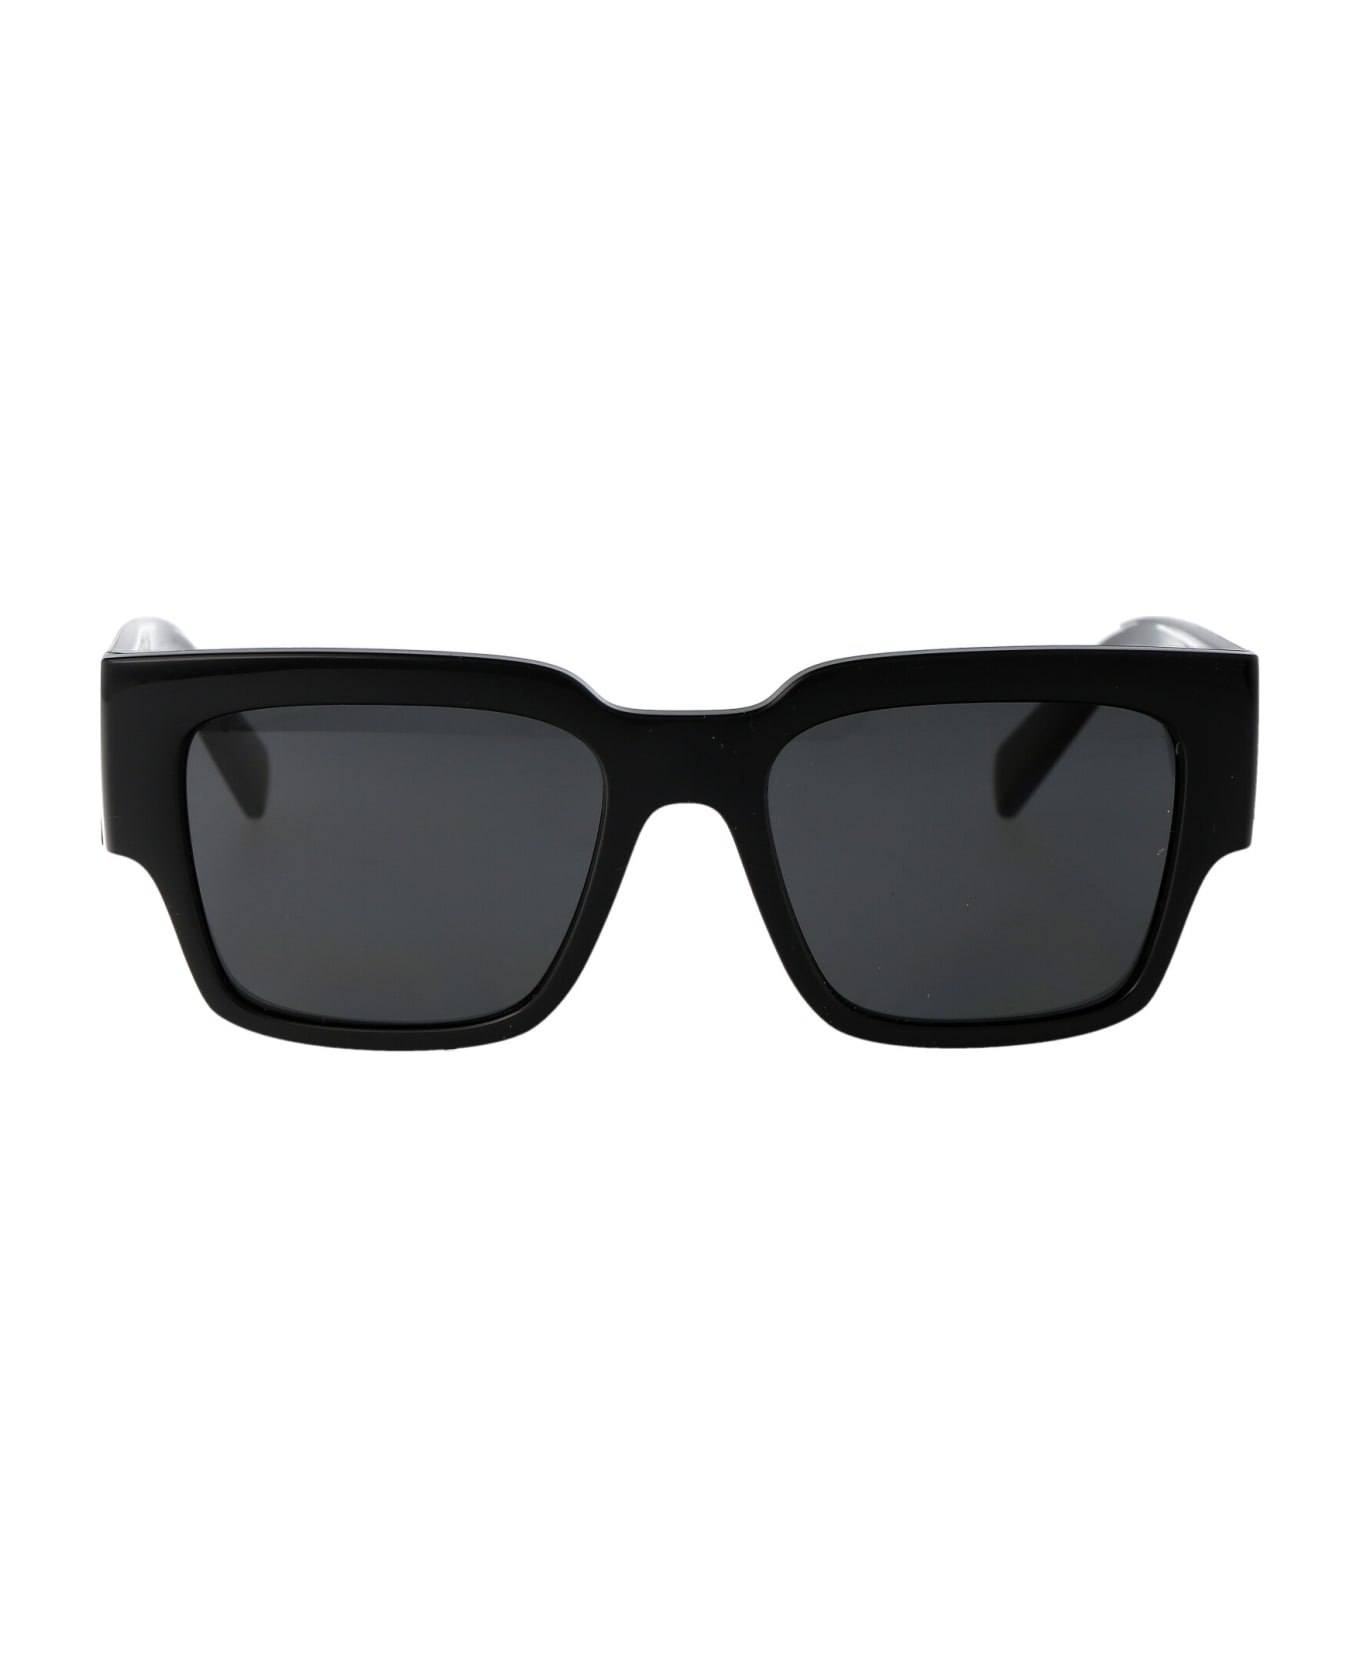 Dolce & Gabbana Eyewear 0dg6184 Sunglasses - 501/87 BLACK